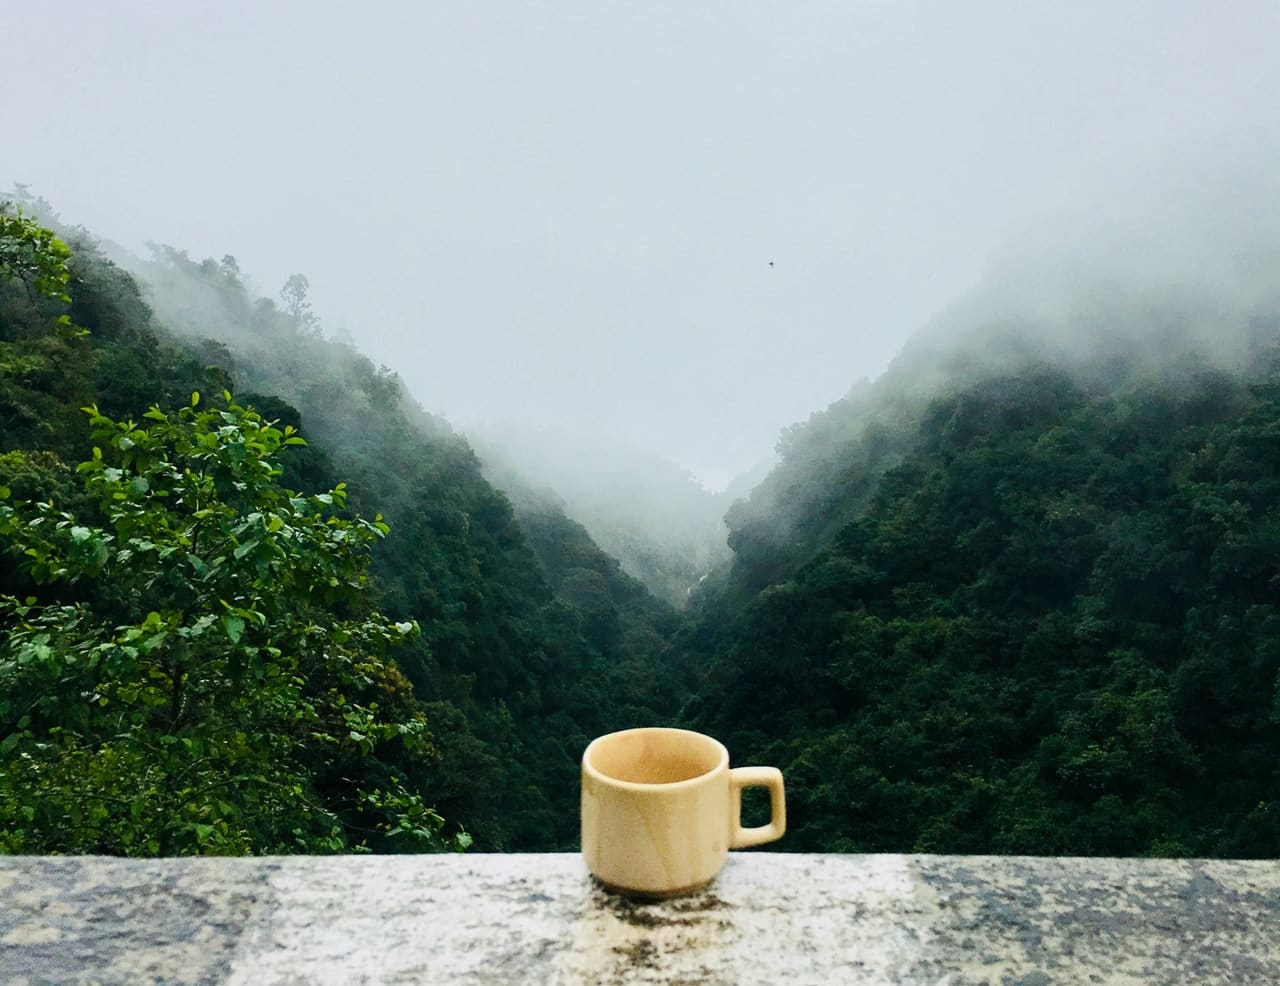 A photo of a mug of coffee overlooking a mountain scene